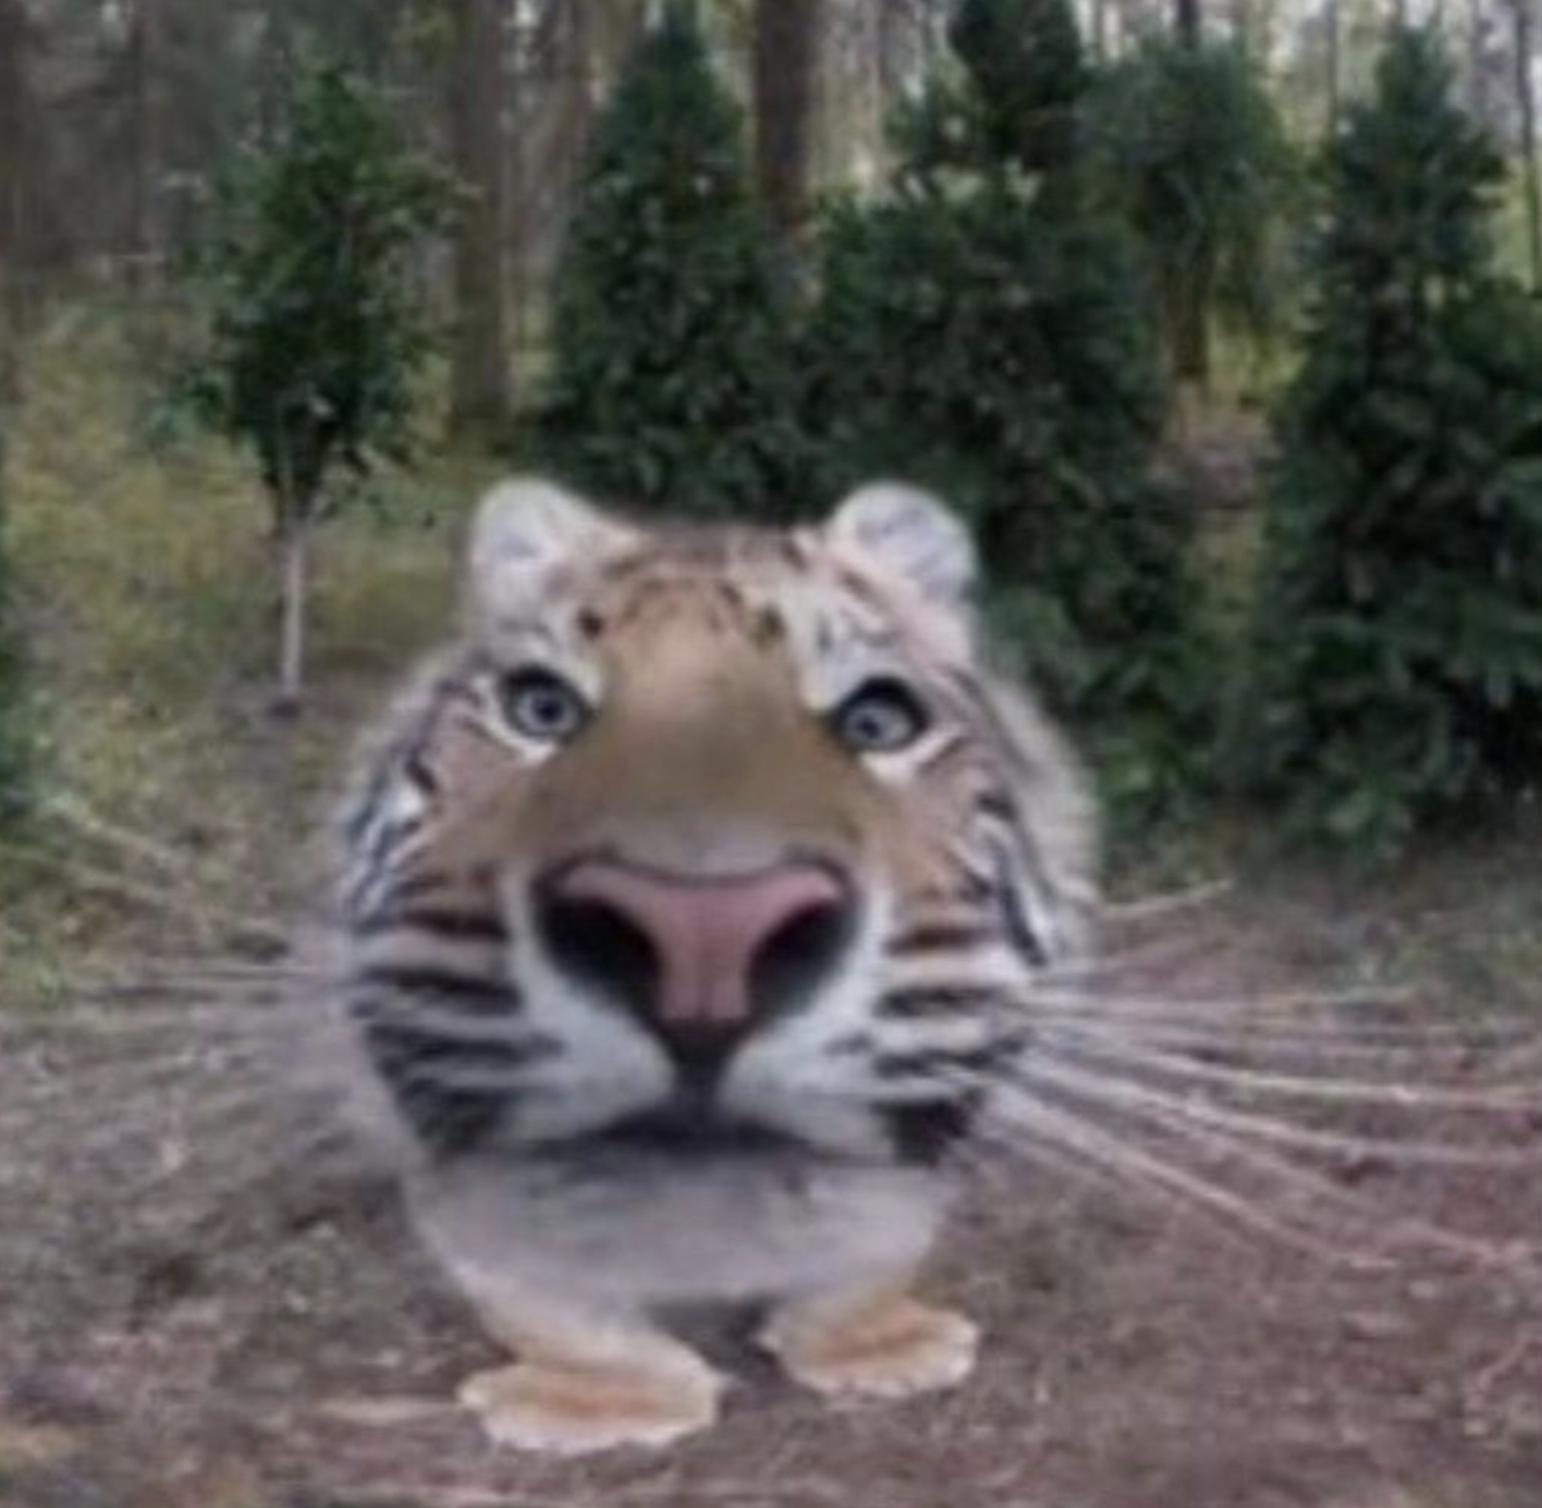 Devastated Tiger